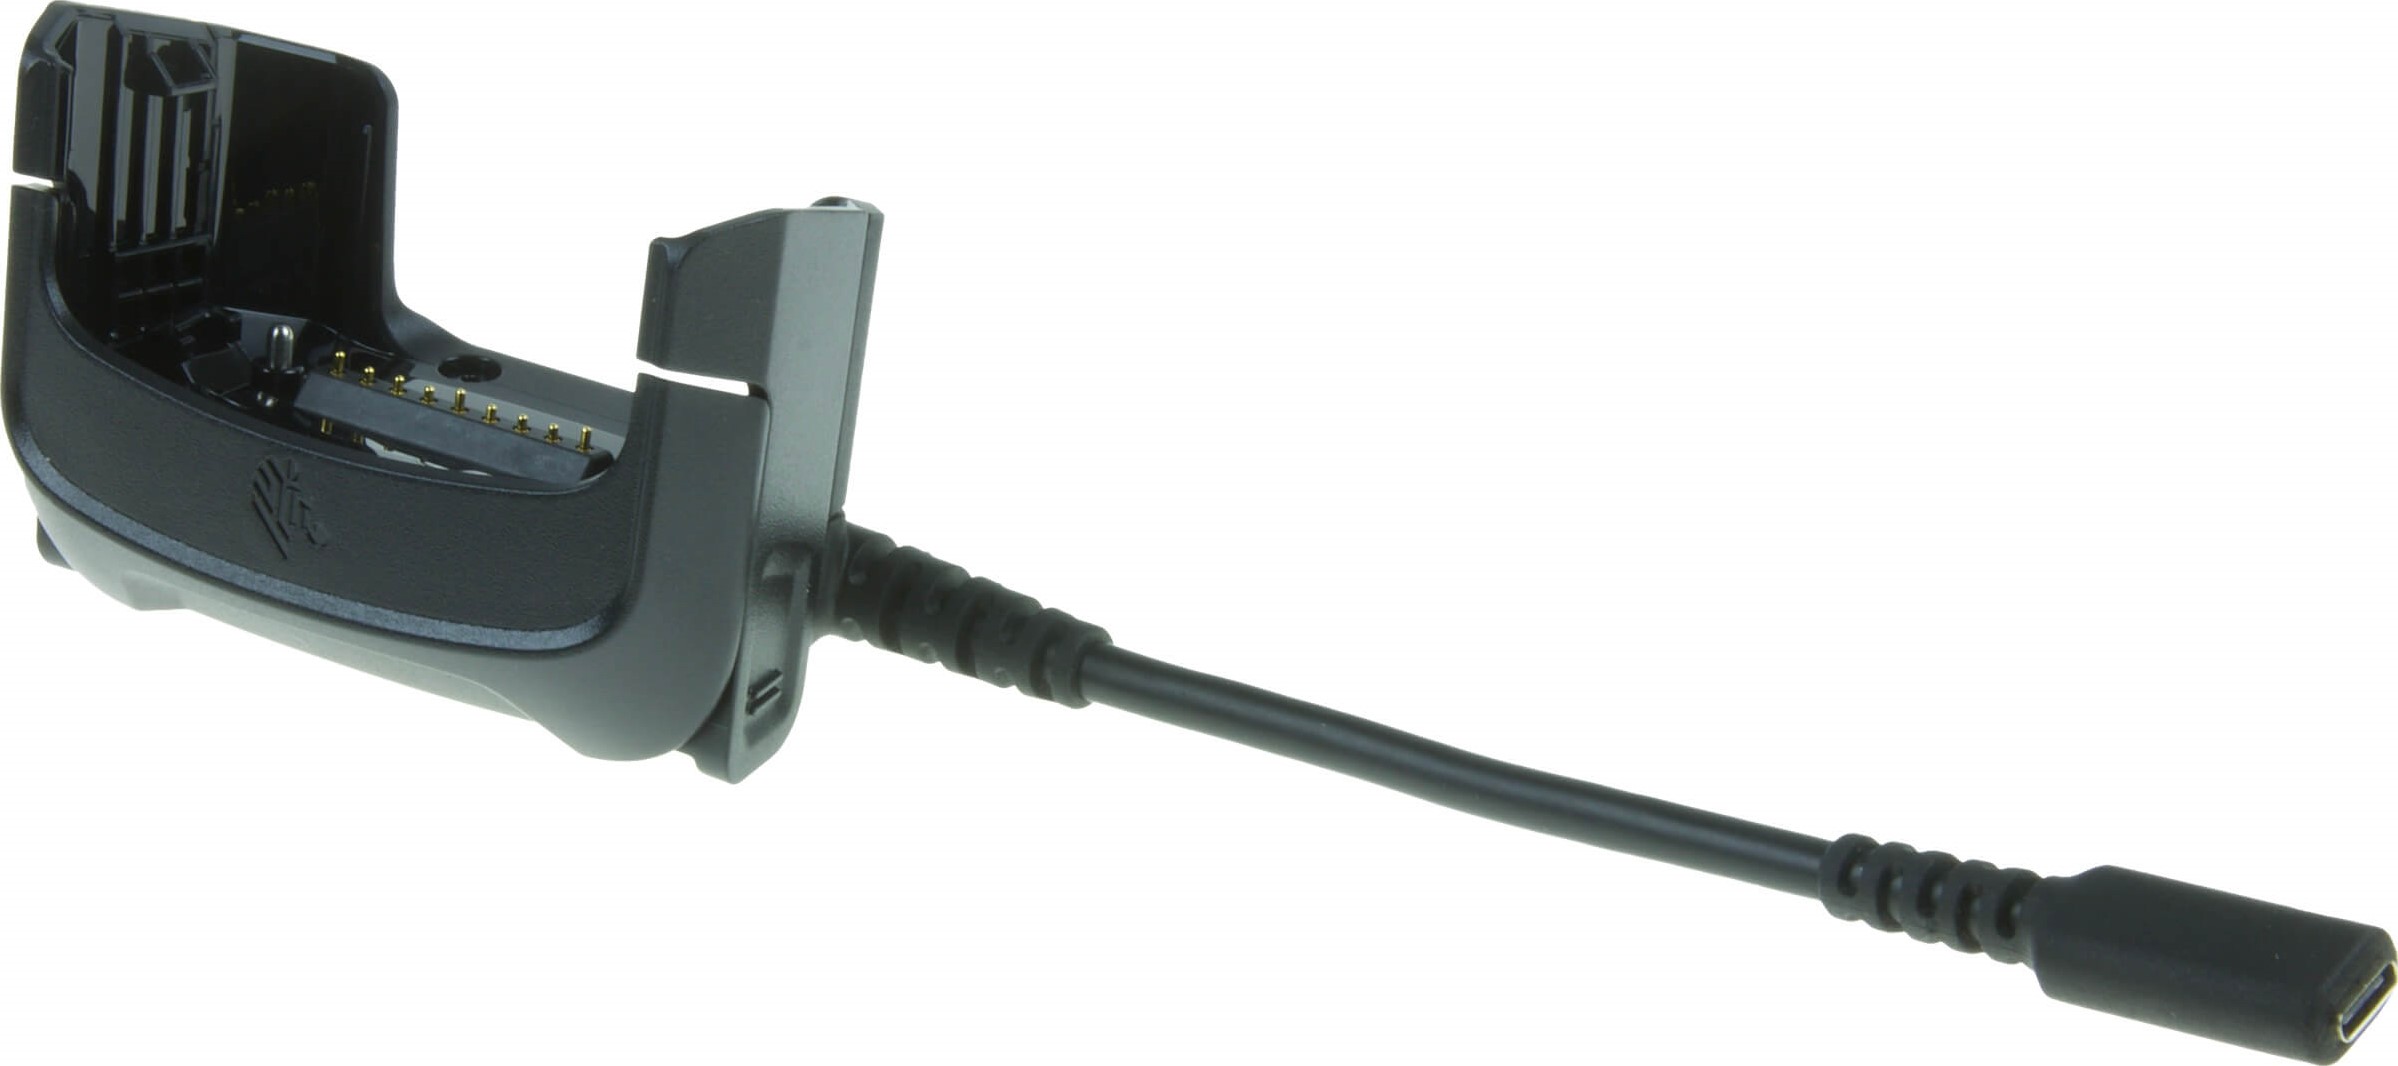 Usb C Communication And Charging Cable For Zebra Mc9300 Posdataeu 0211